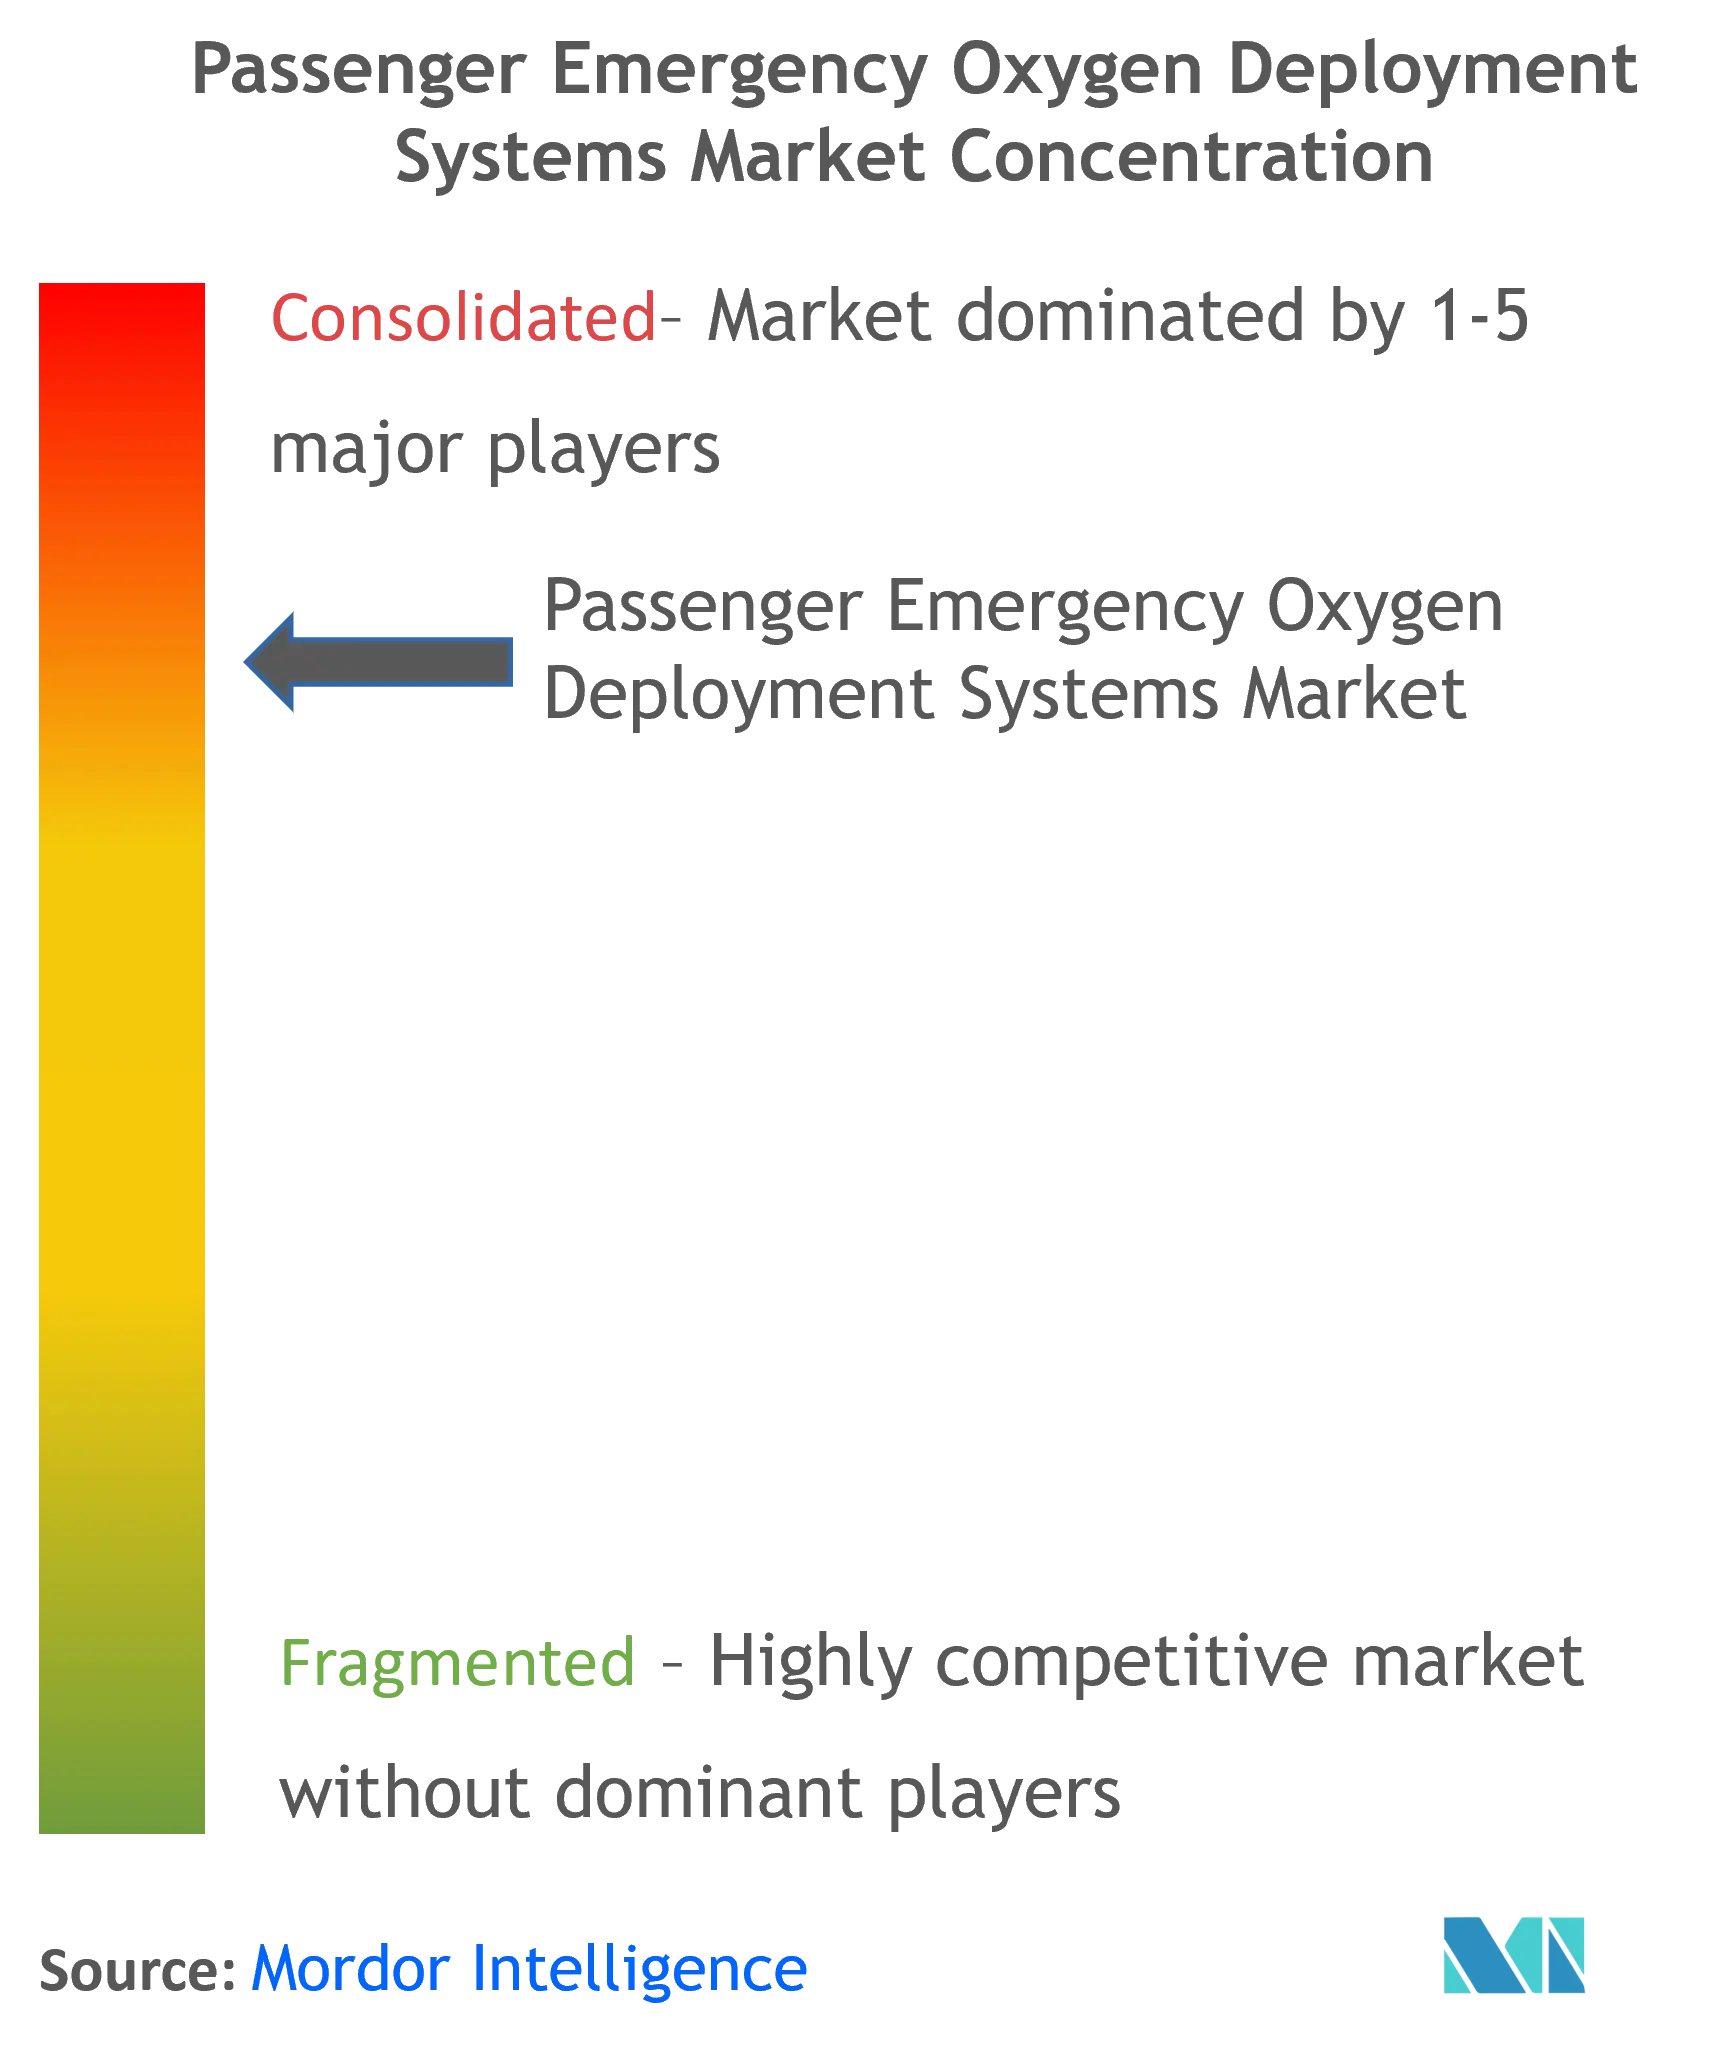 Passenger Emergency Oxygen Deployment Systems Market Concentration